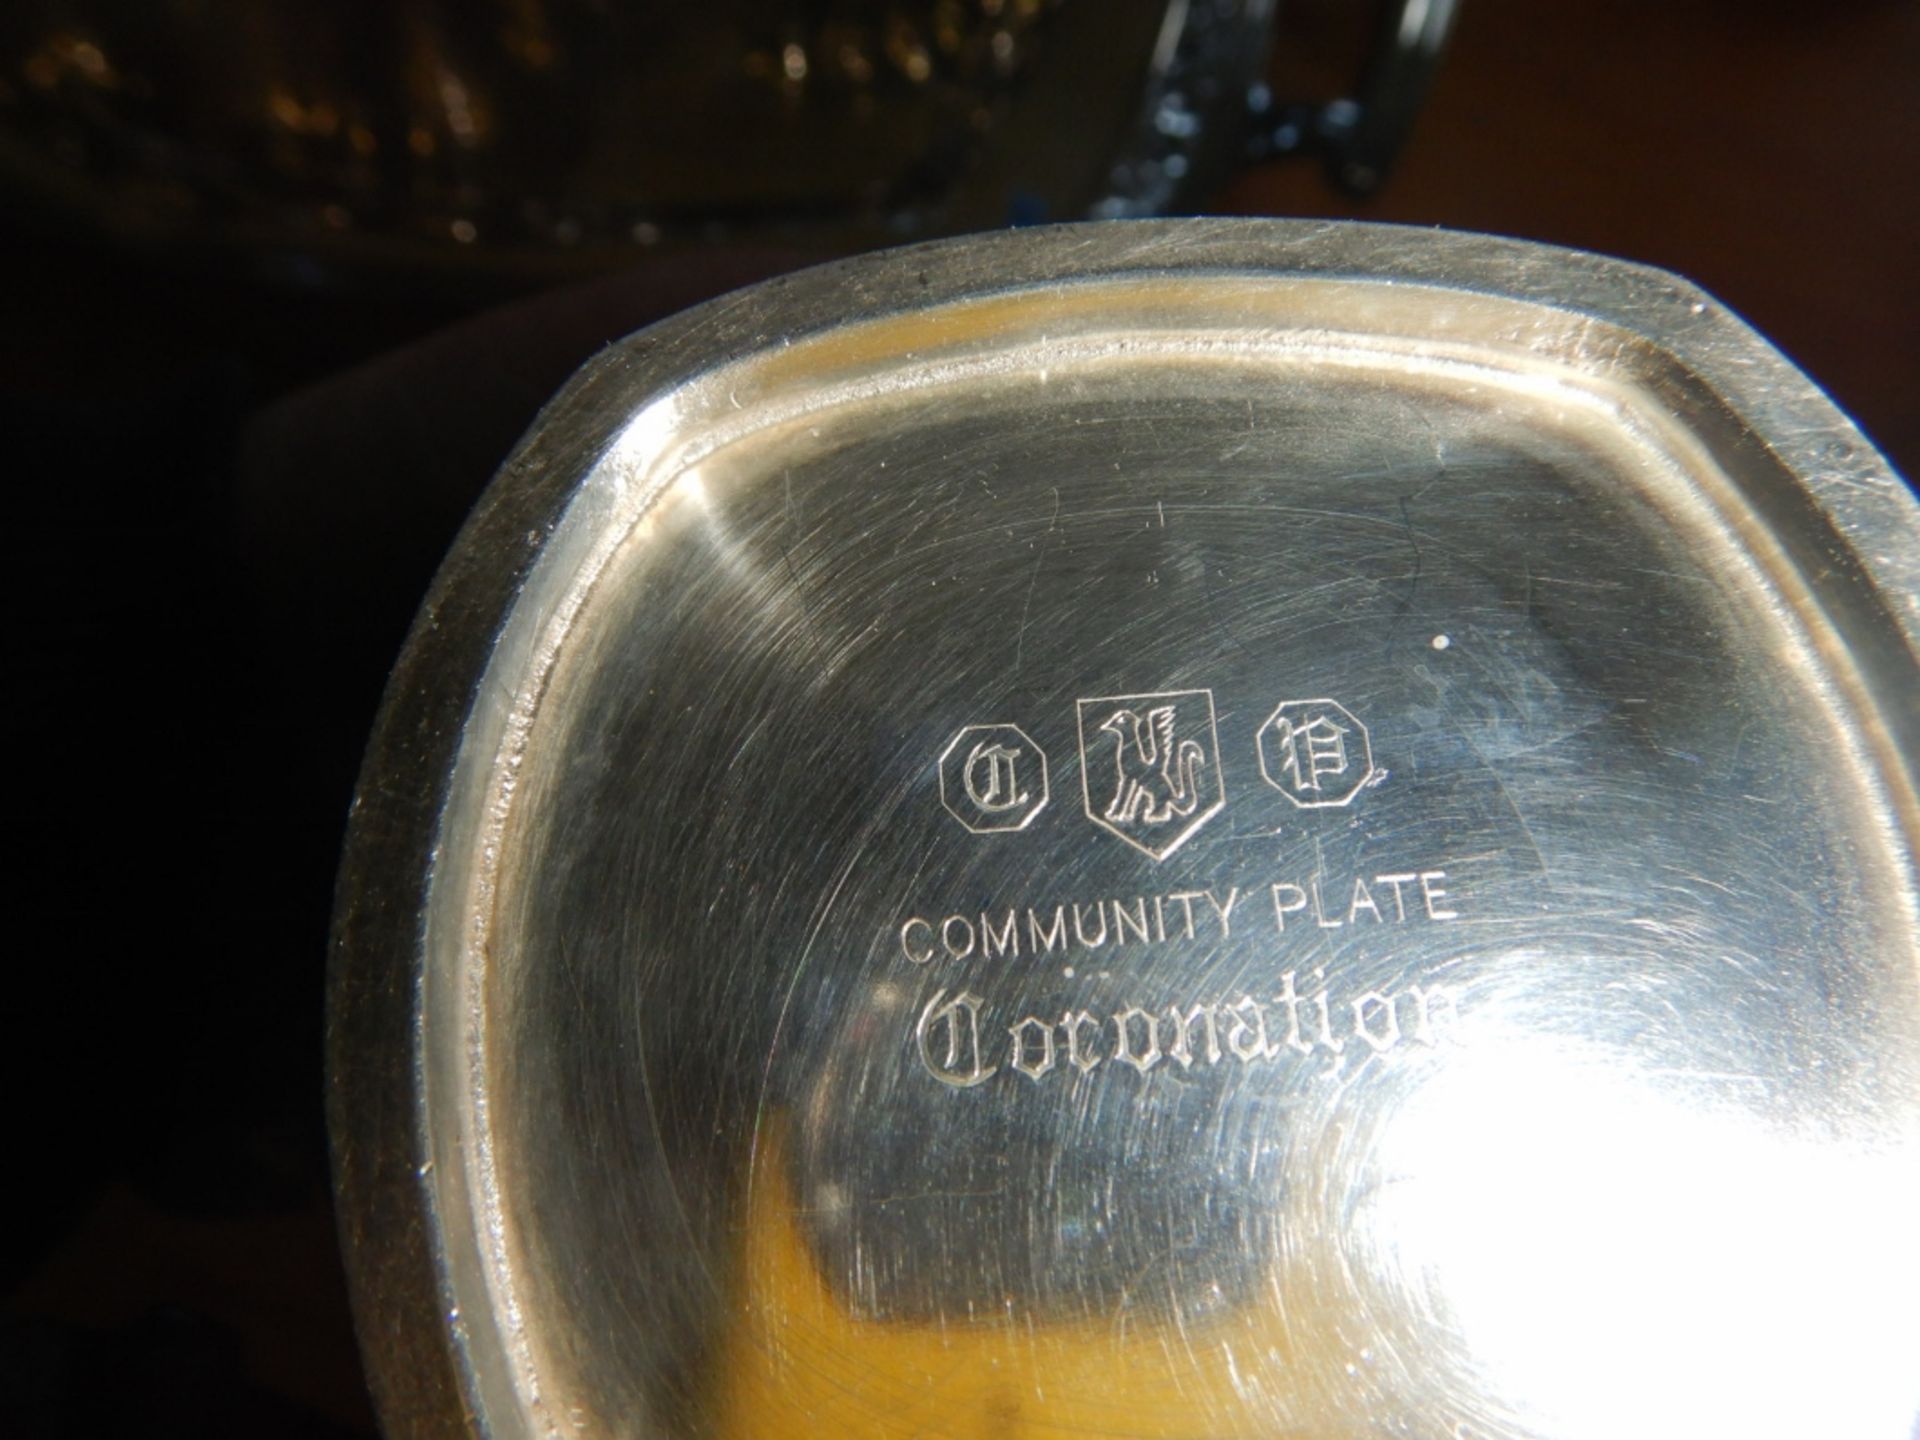 ANTIQUE "COMMUNITY PLATE CORONATION" SILVER TEA SERVICE - Image 3 of 3